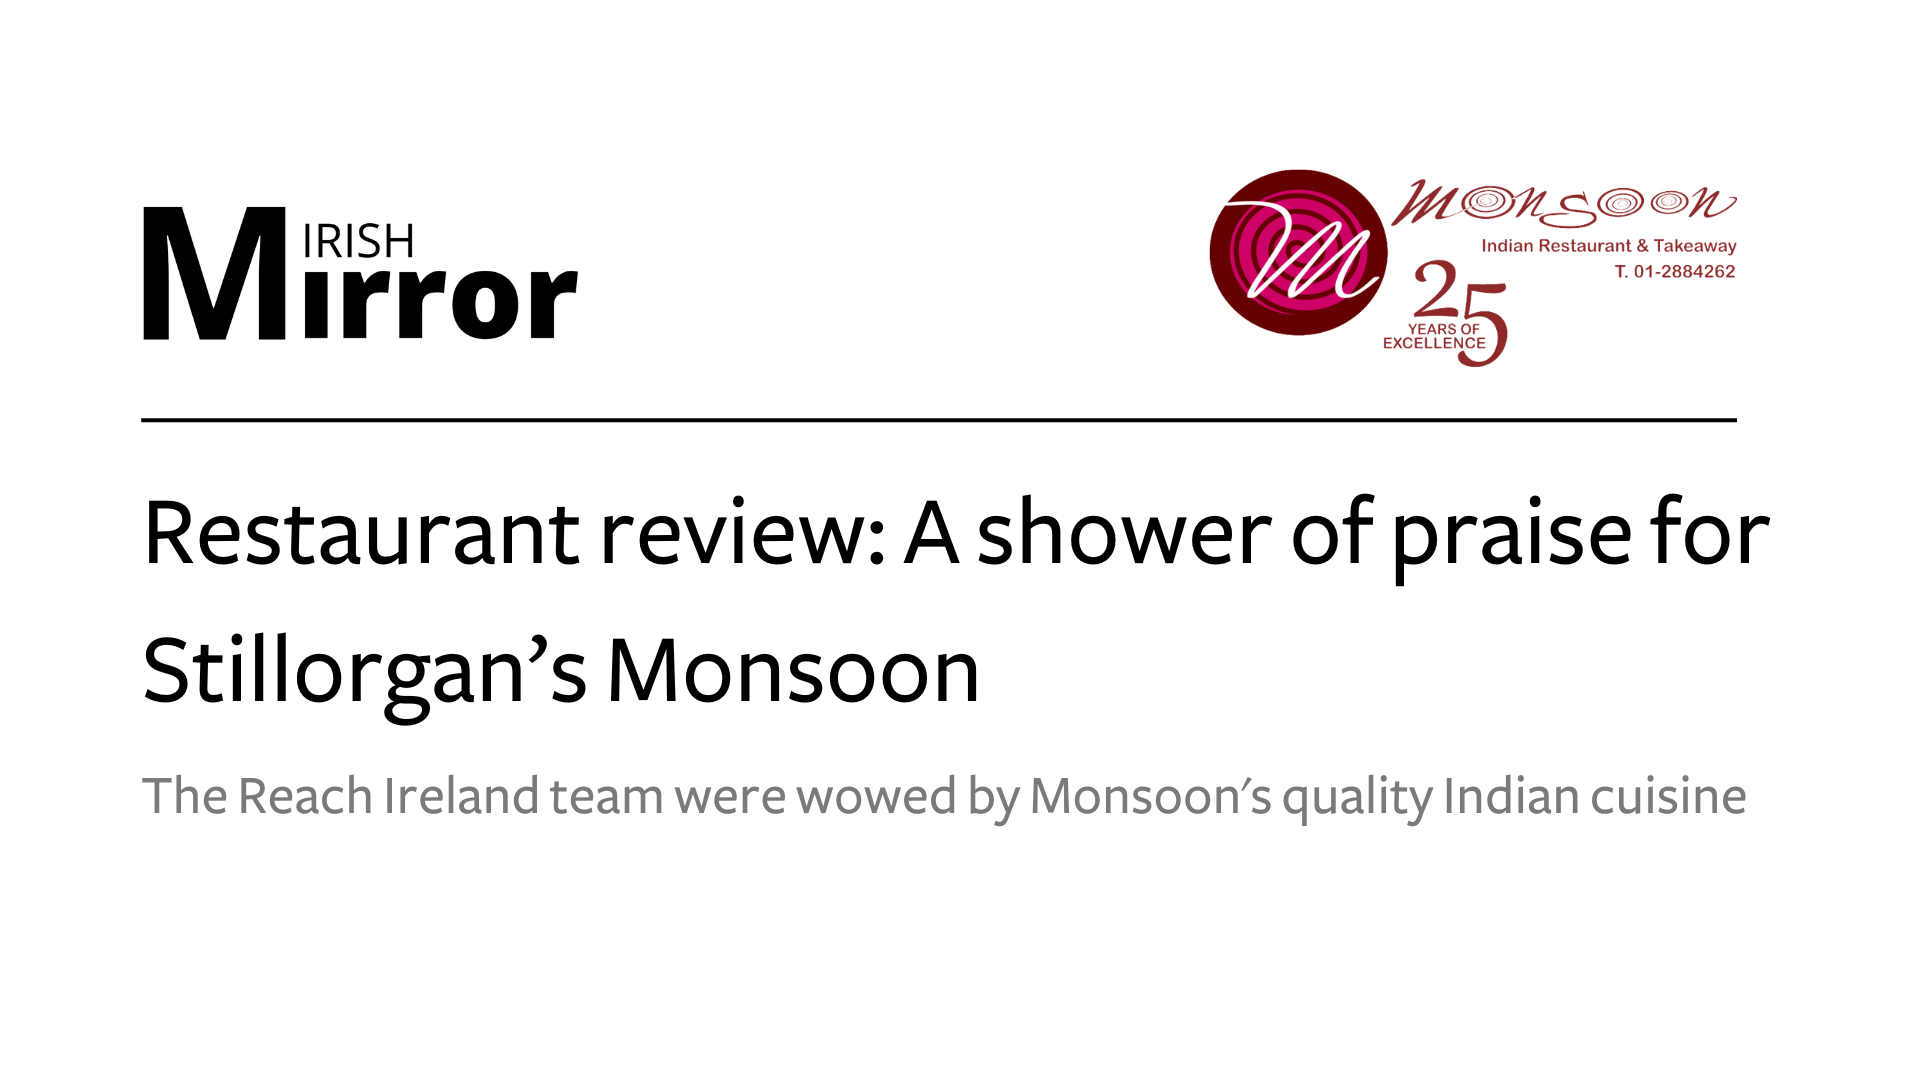 Monsoon Stillorgan Irish Mirror